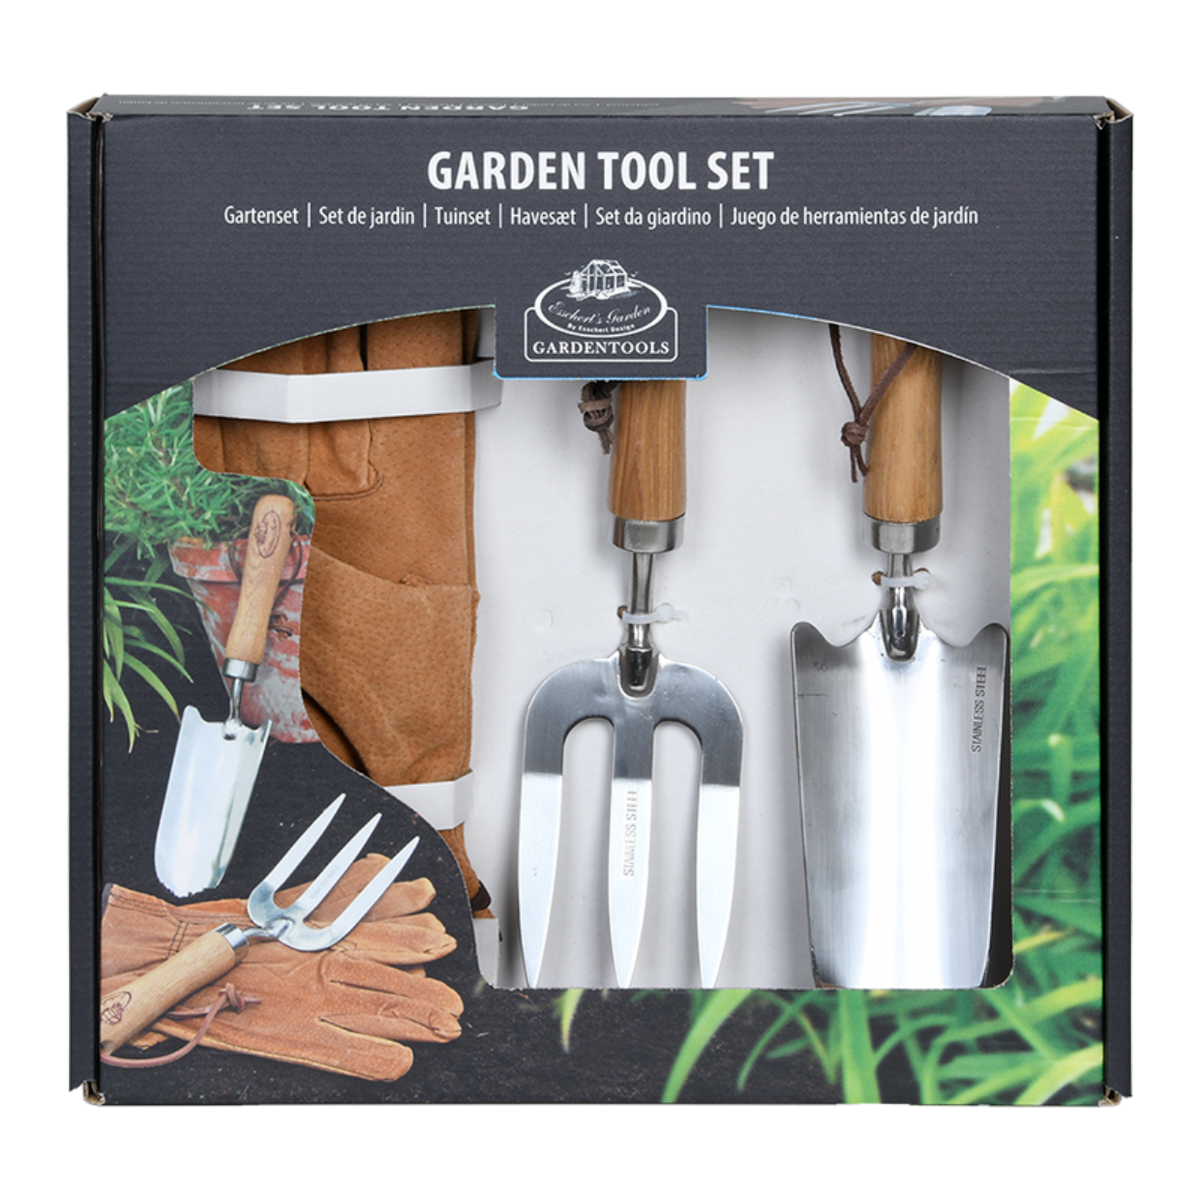 esschert design set de jardinage une idee cadeau chez ugo et lea (1)